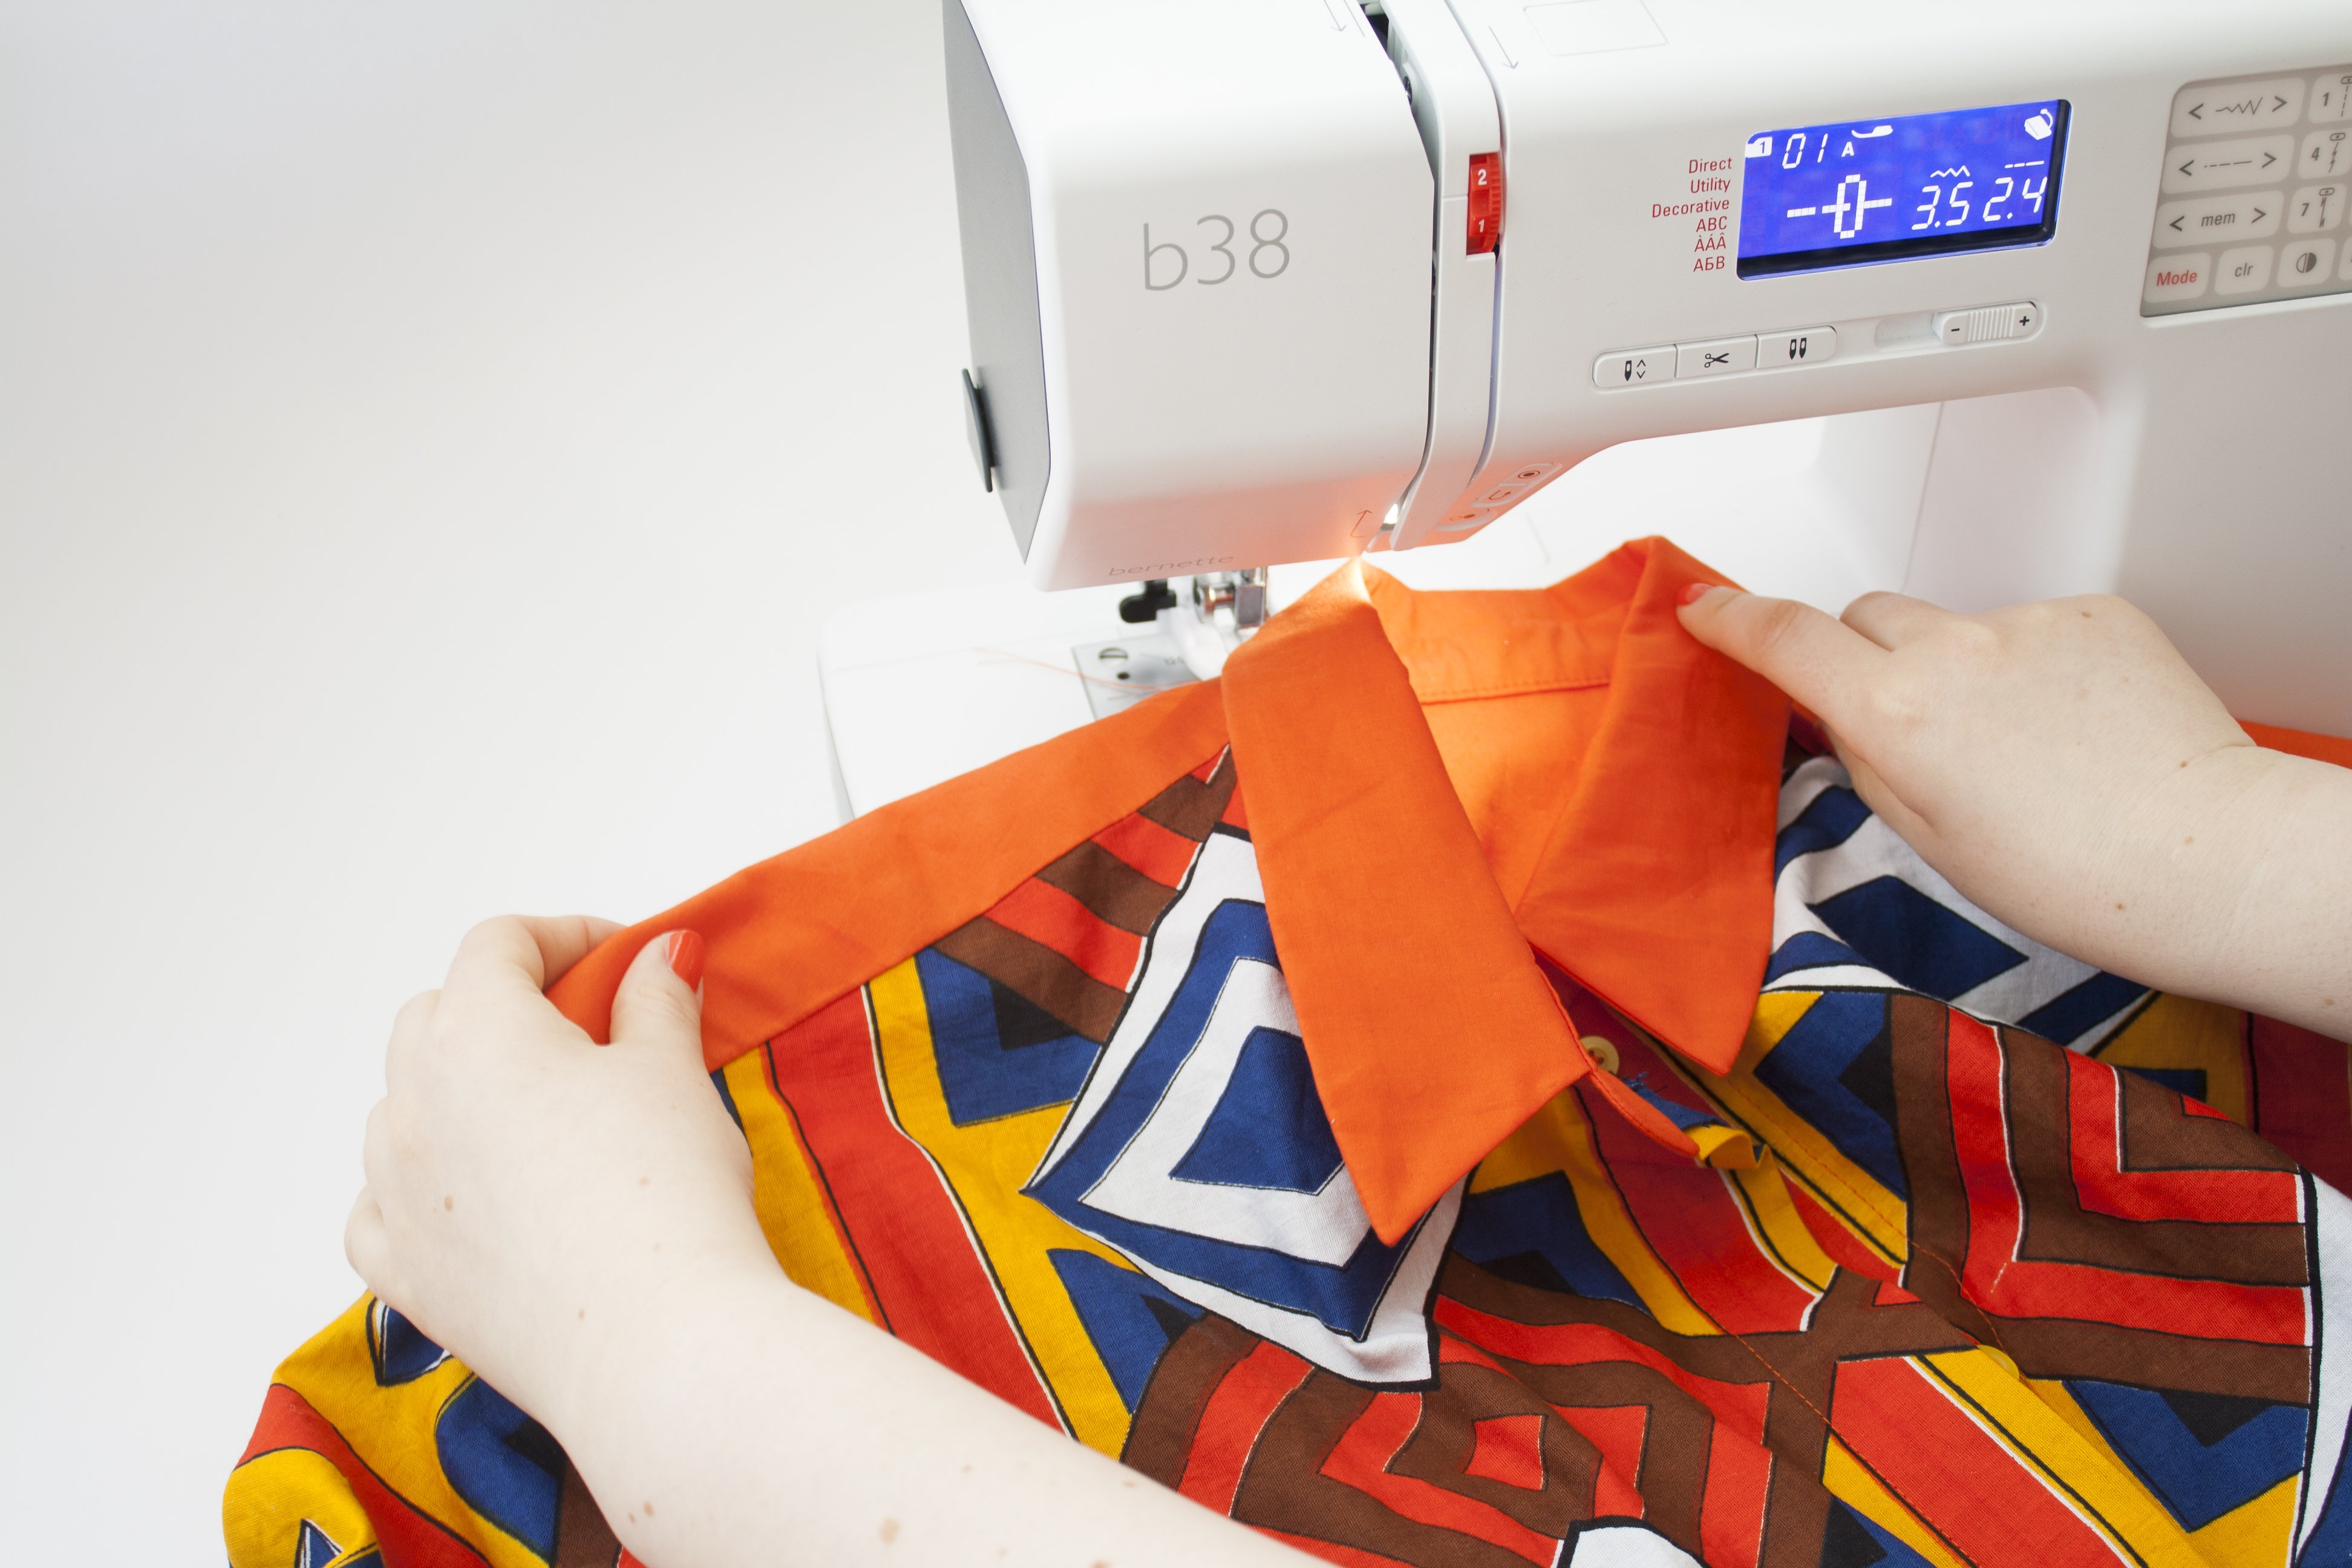 collar sew shirt sewing pattern bernina tutorial perfect buttonhole according program stand mark machine